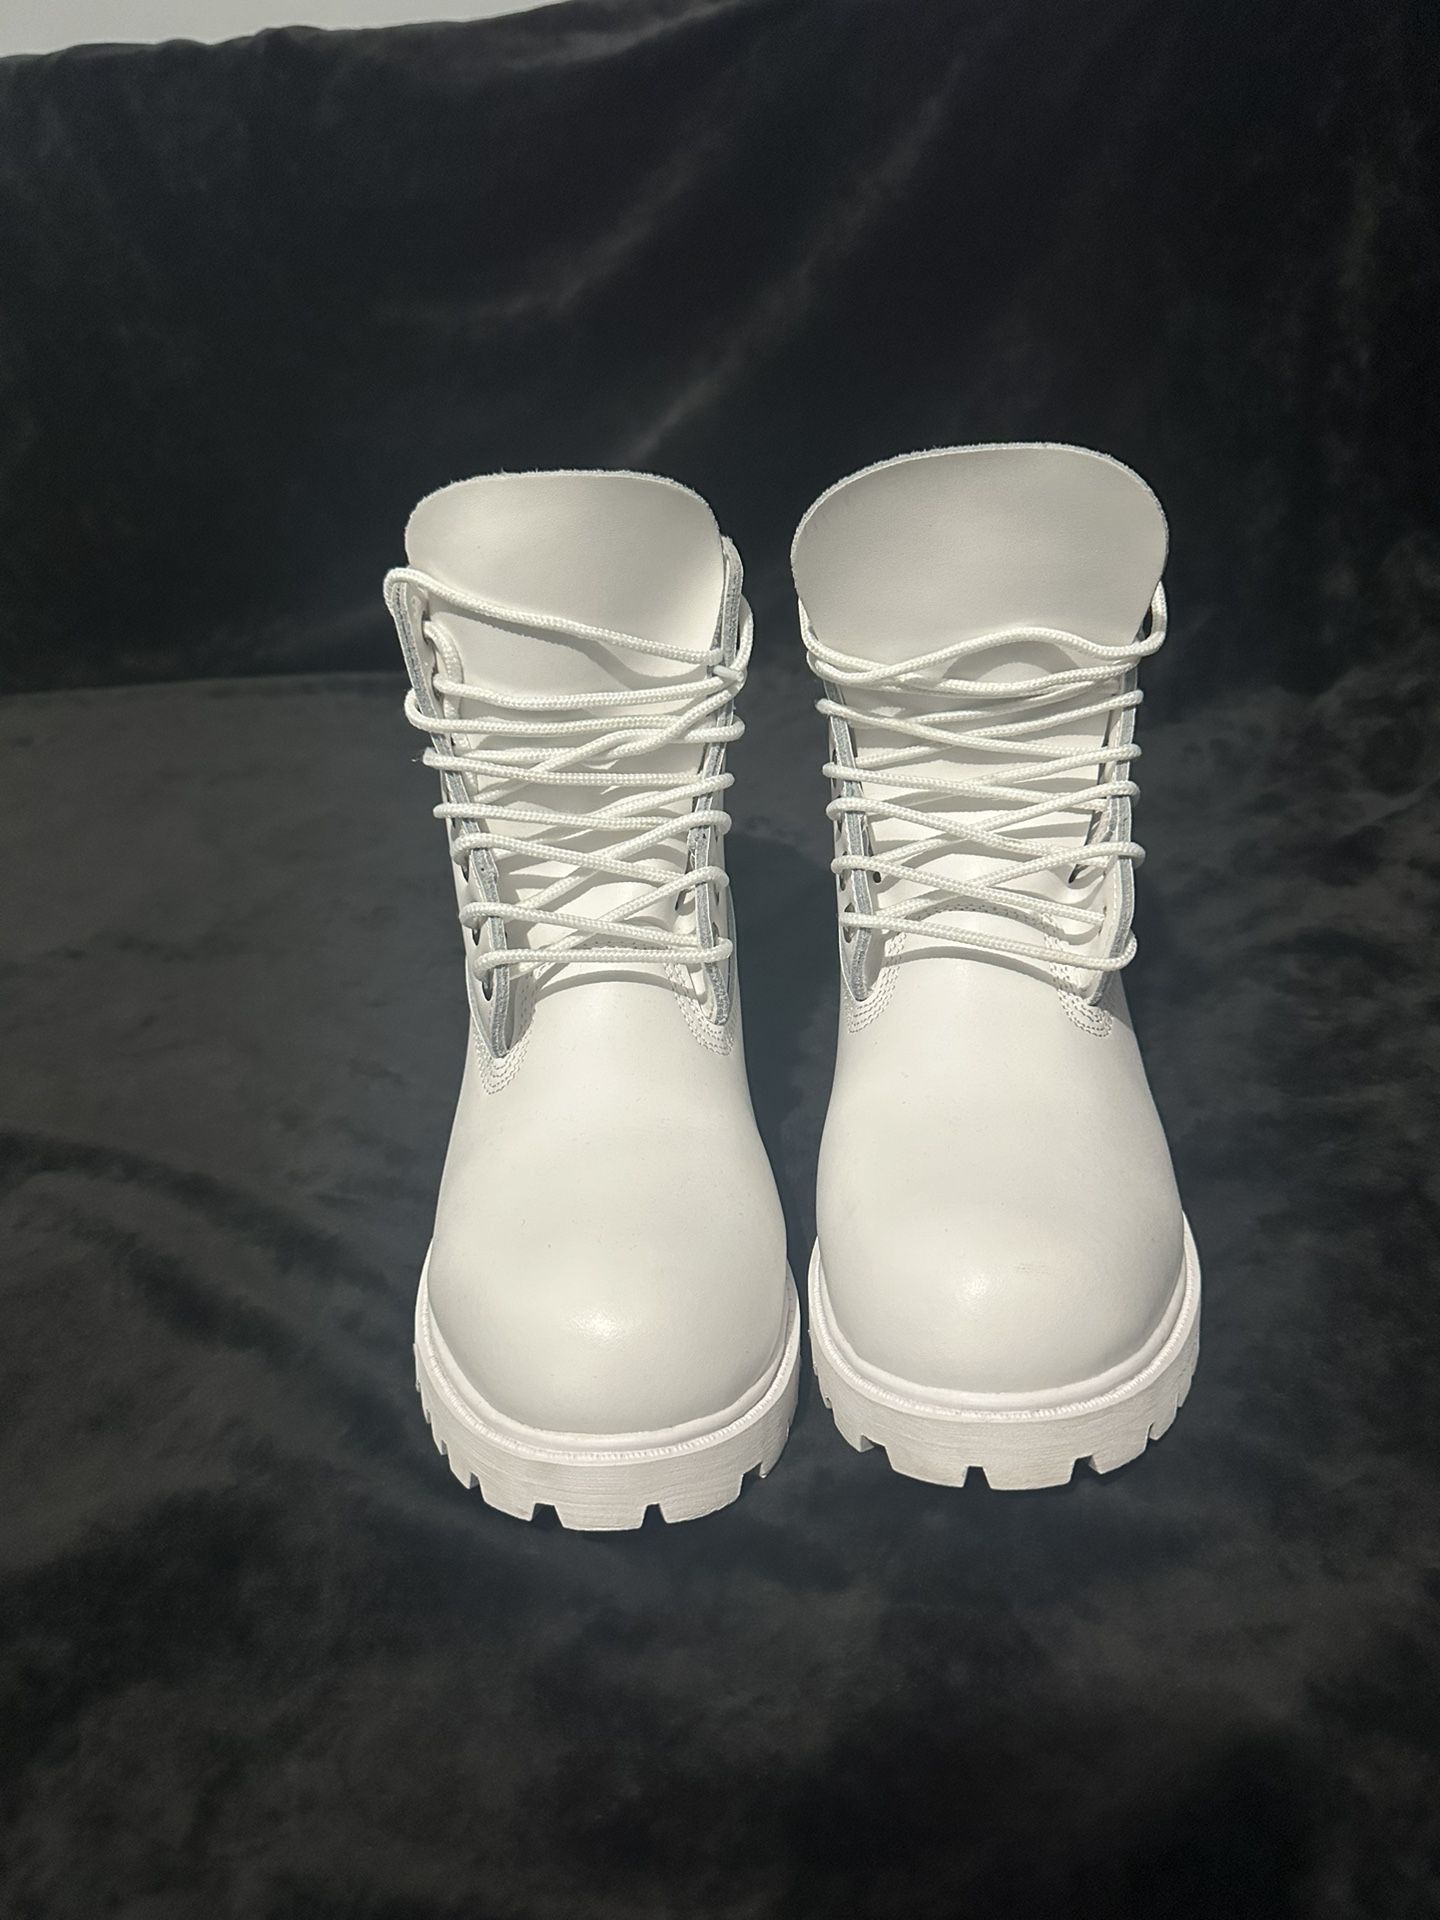 Timberland boots size 9 1/2